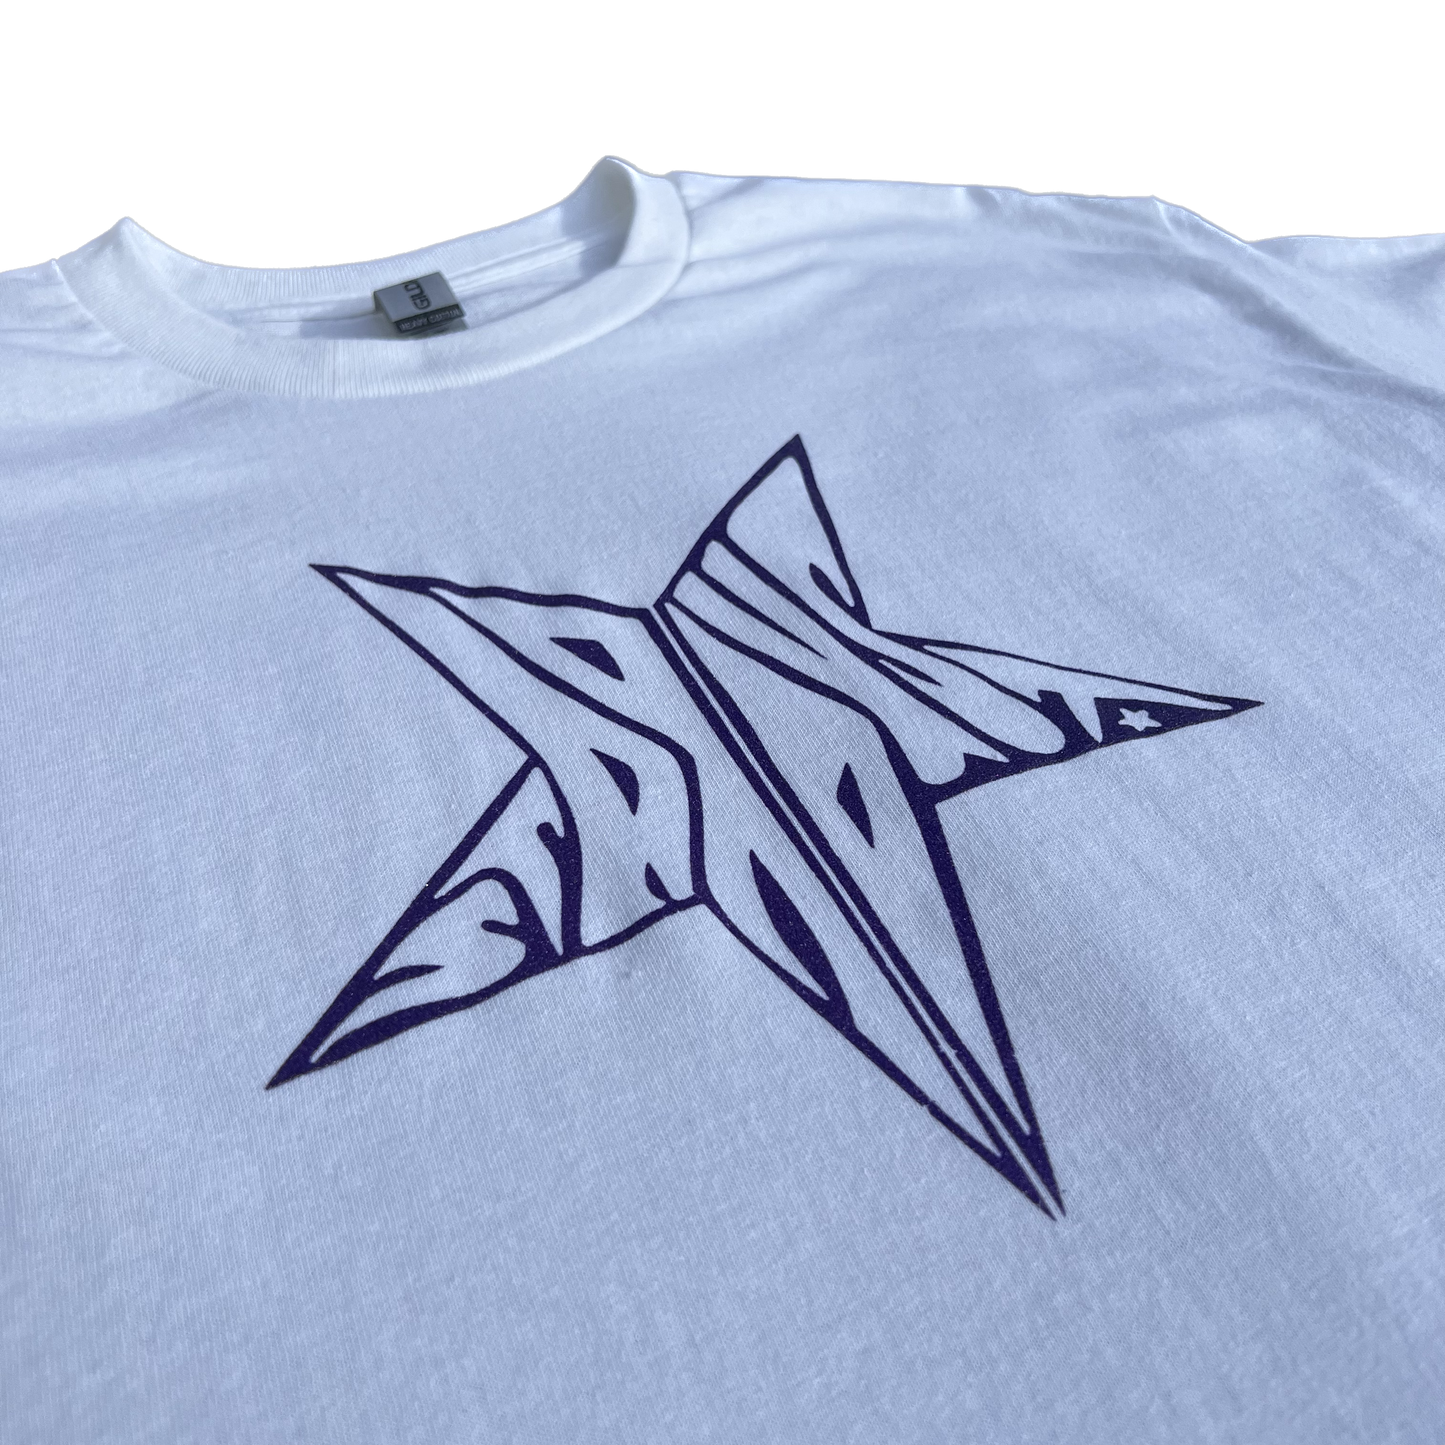 Stardust Skate Shop Purple Shimmer Star Tee 026 - Assorted Colors - 6.0 oz